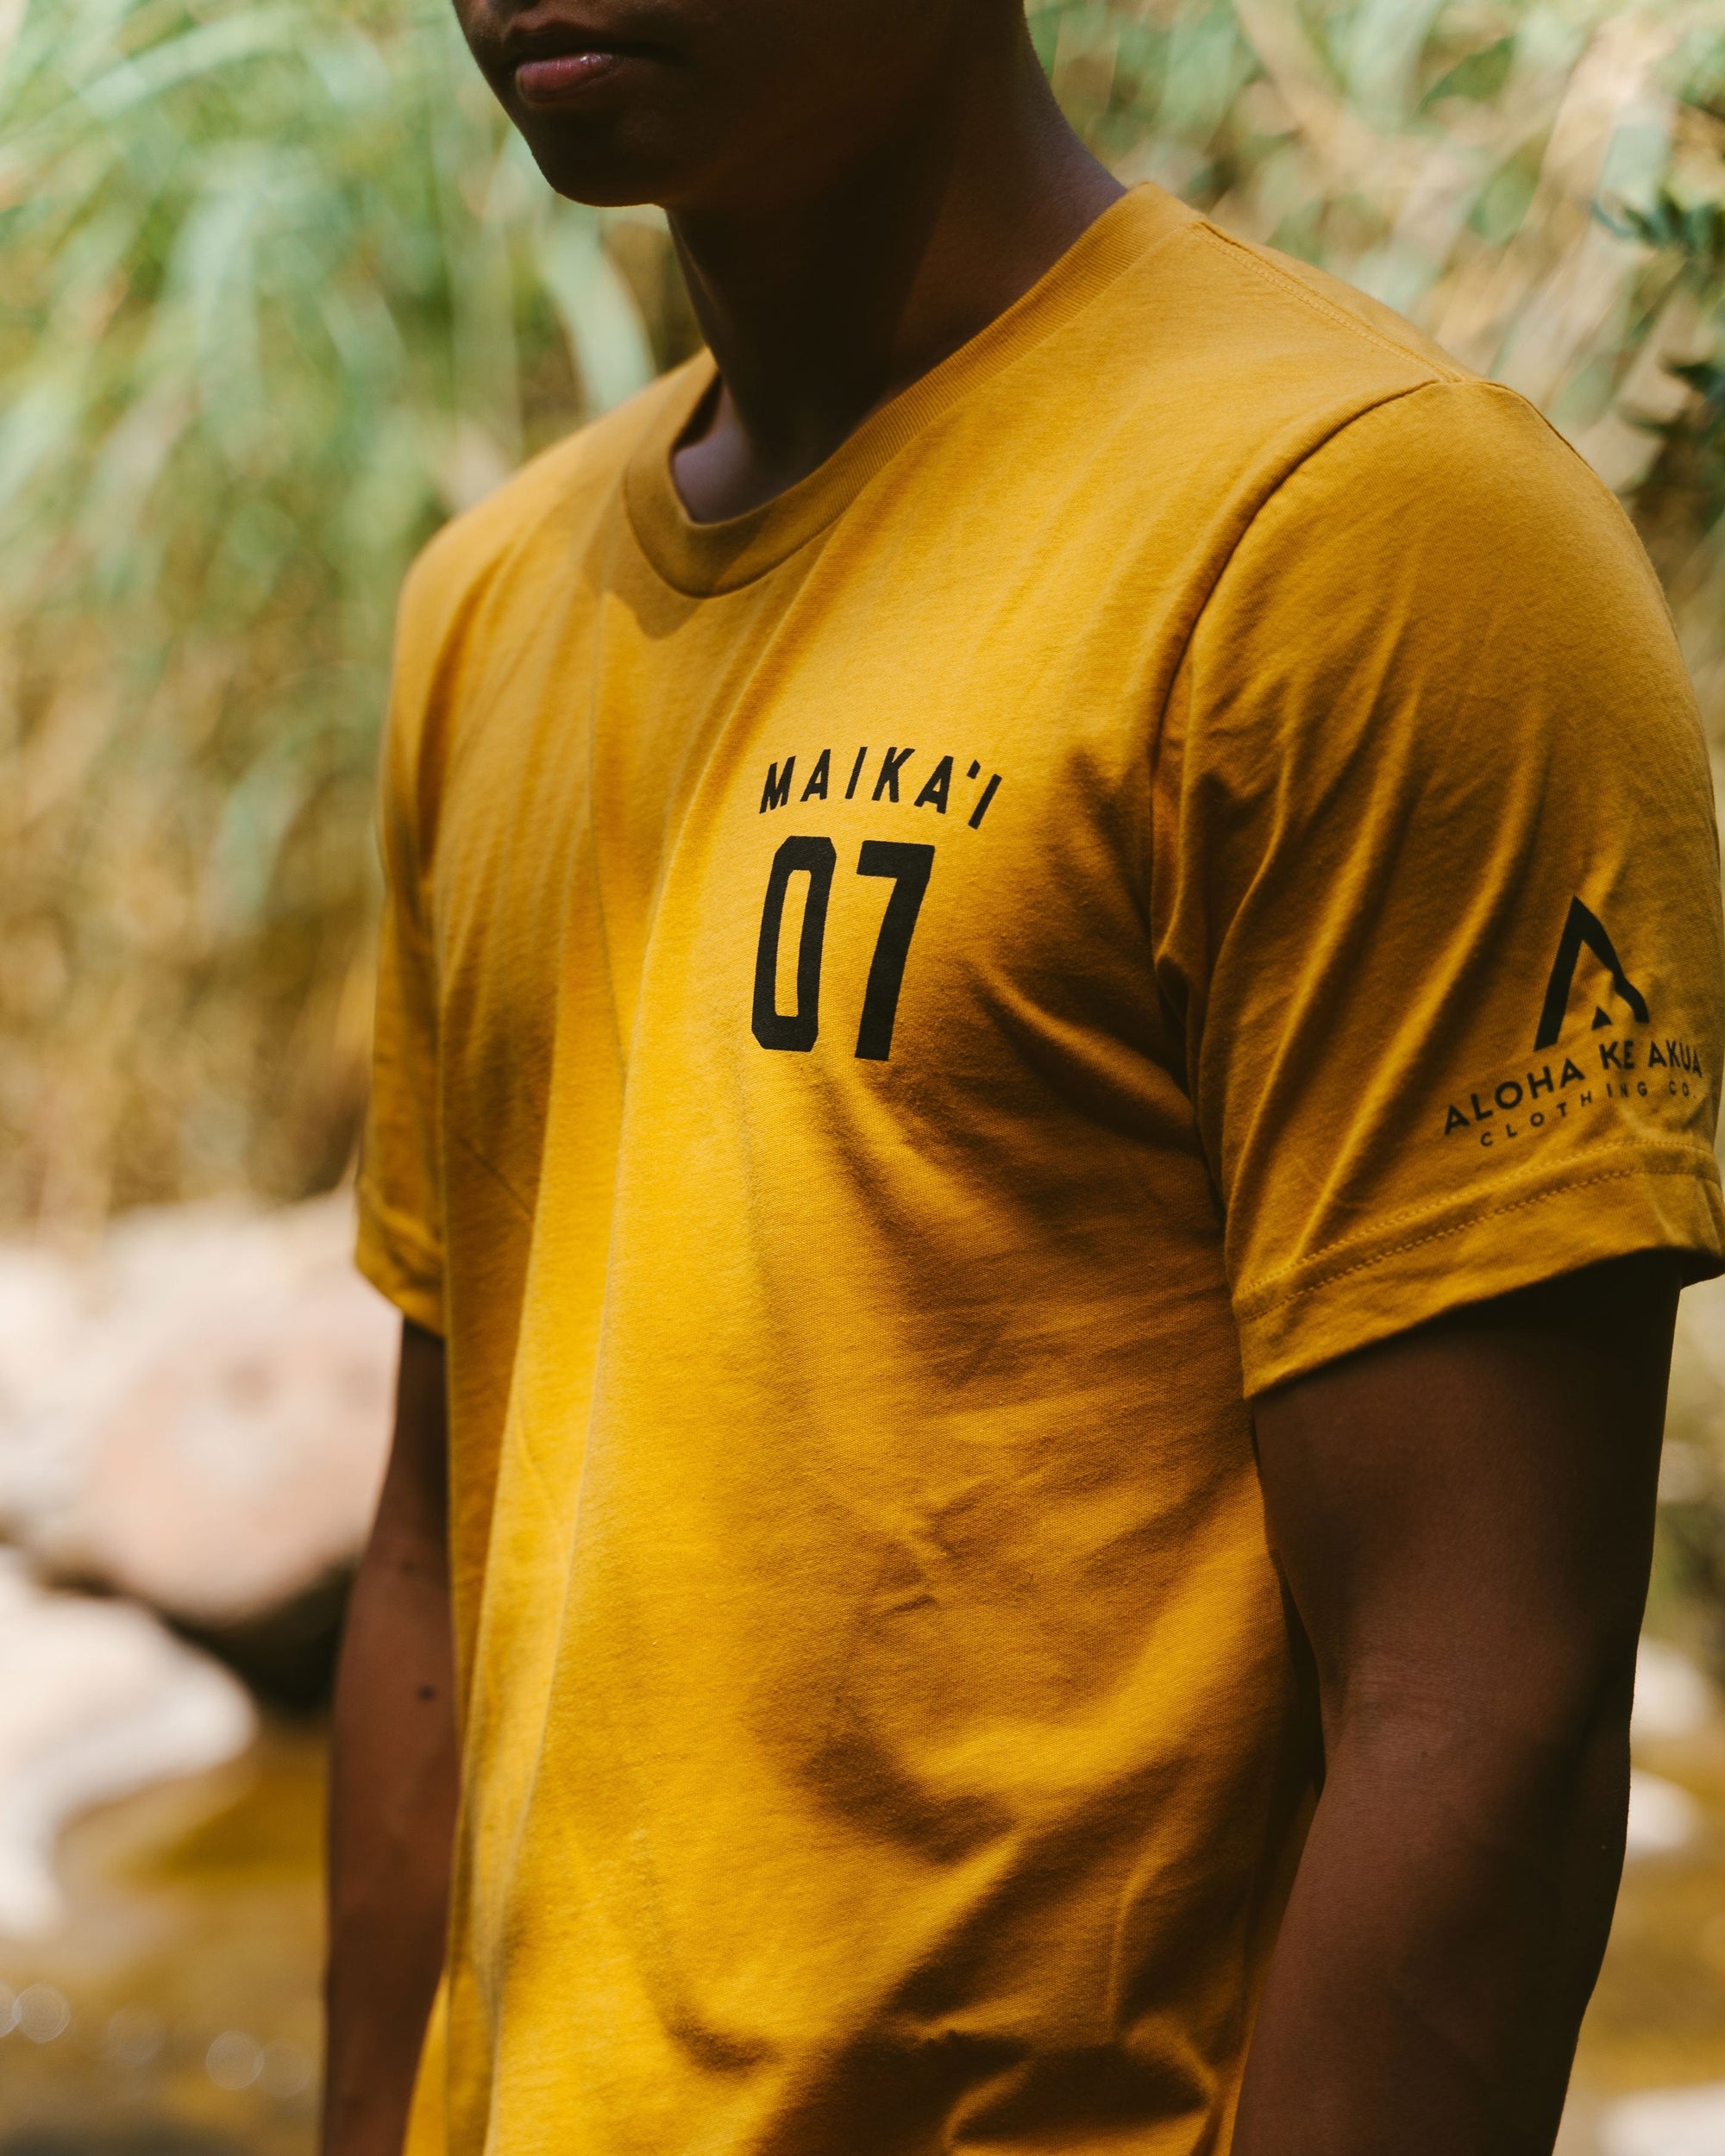 Pop-Up Mākeke - Aloha Ke Akua Clothing - Maikaʻi 07 Men's Short Sleeve T-Shirt - Mustard - In Use